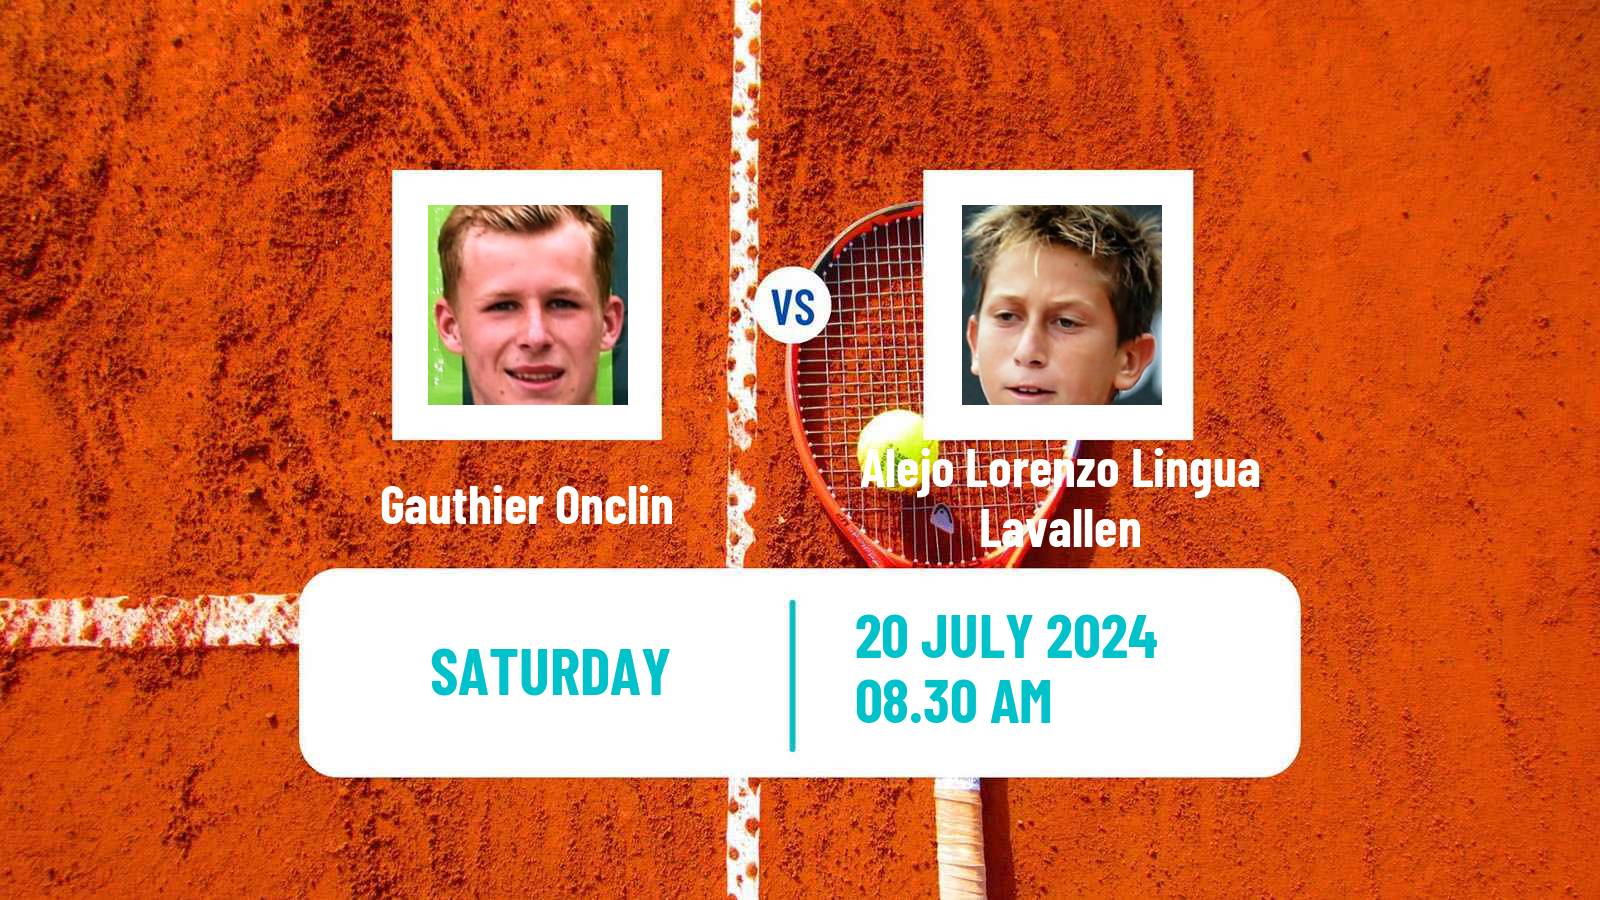 Tennis ITF M25 Esch Alzette 2 Men Gauthier Onclin - Alejo Lorenzo Lingua Lavallen